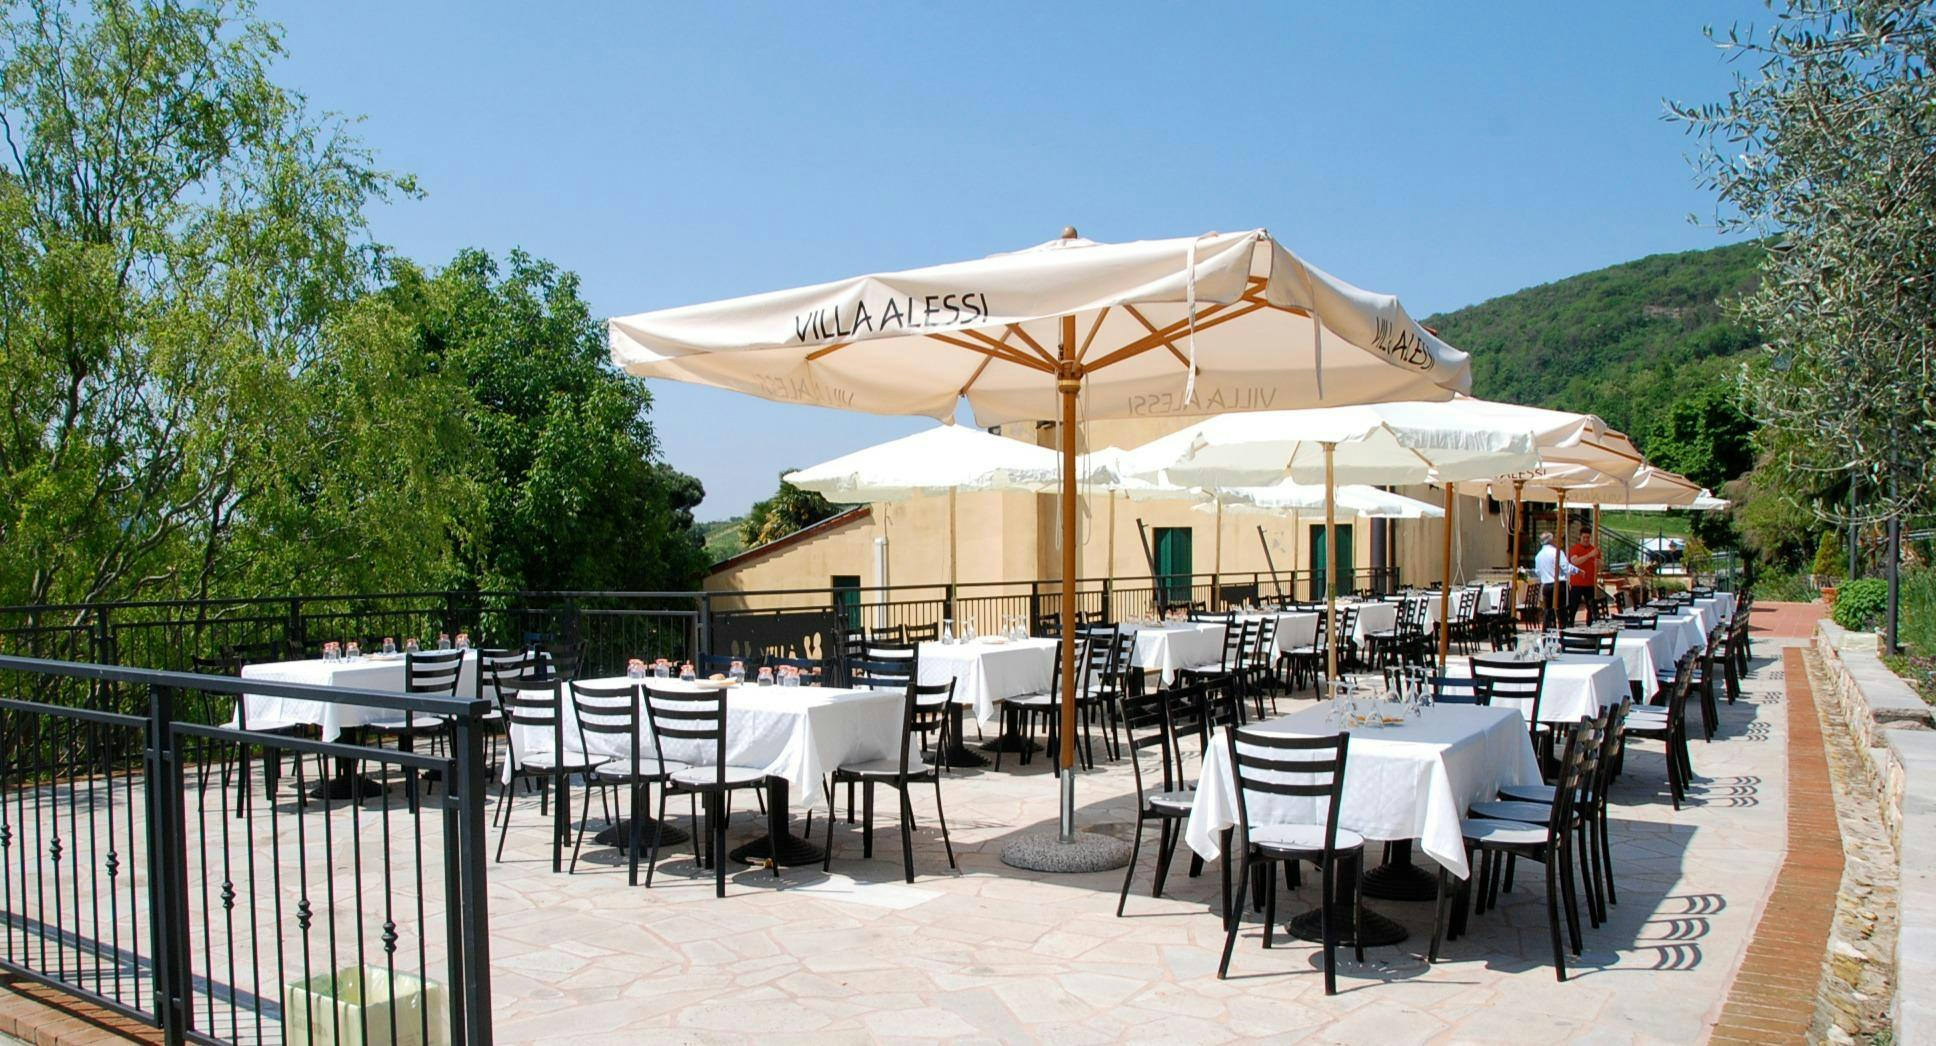 Photo of restaurant Villa Alessi in Centre, Cinto Euganeo